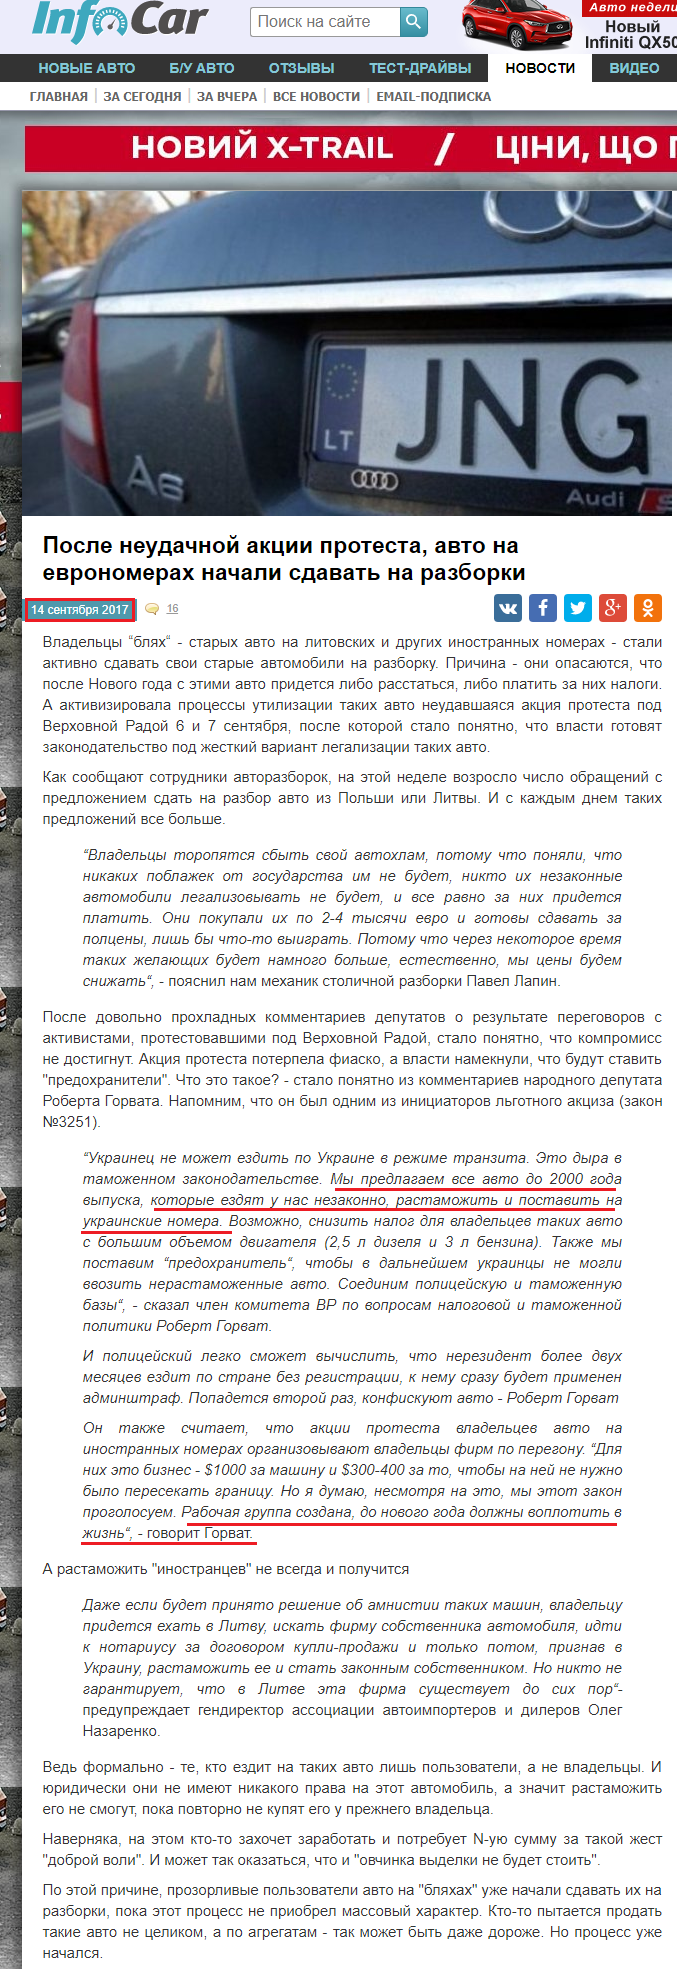 http://news.infocar.ua/posle_neudachnoy_akcii_protesta_avto_na_evronomerah_nachali_sdavat_na_razborki_116500.html